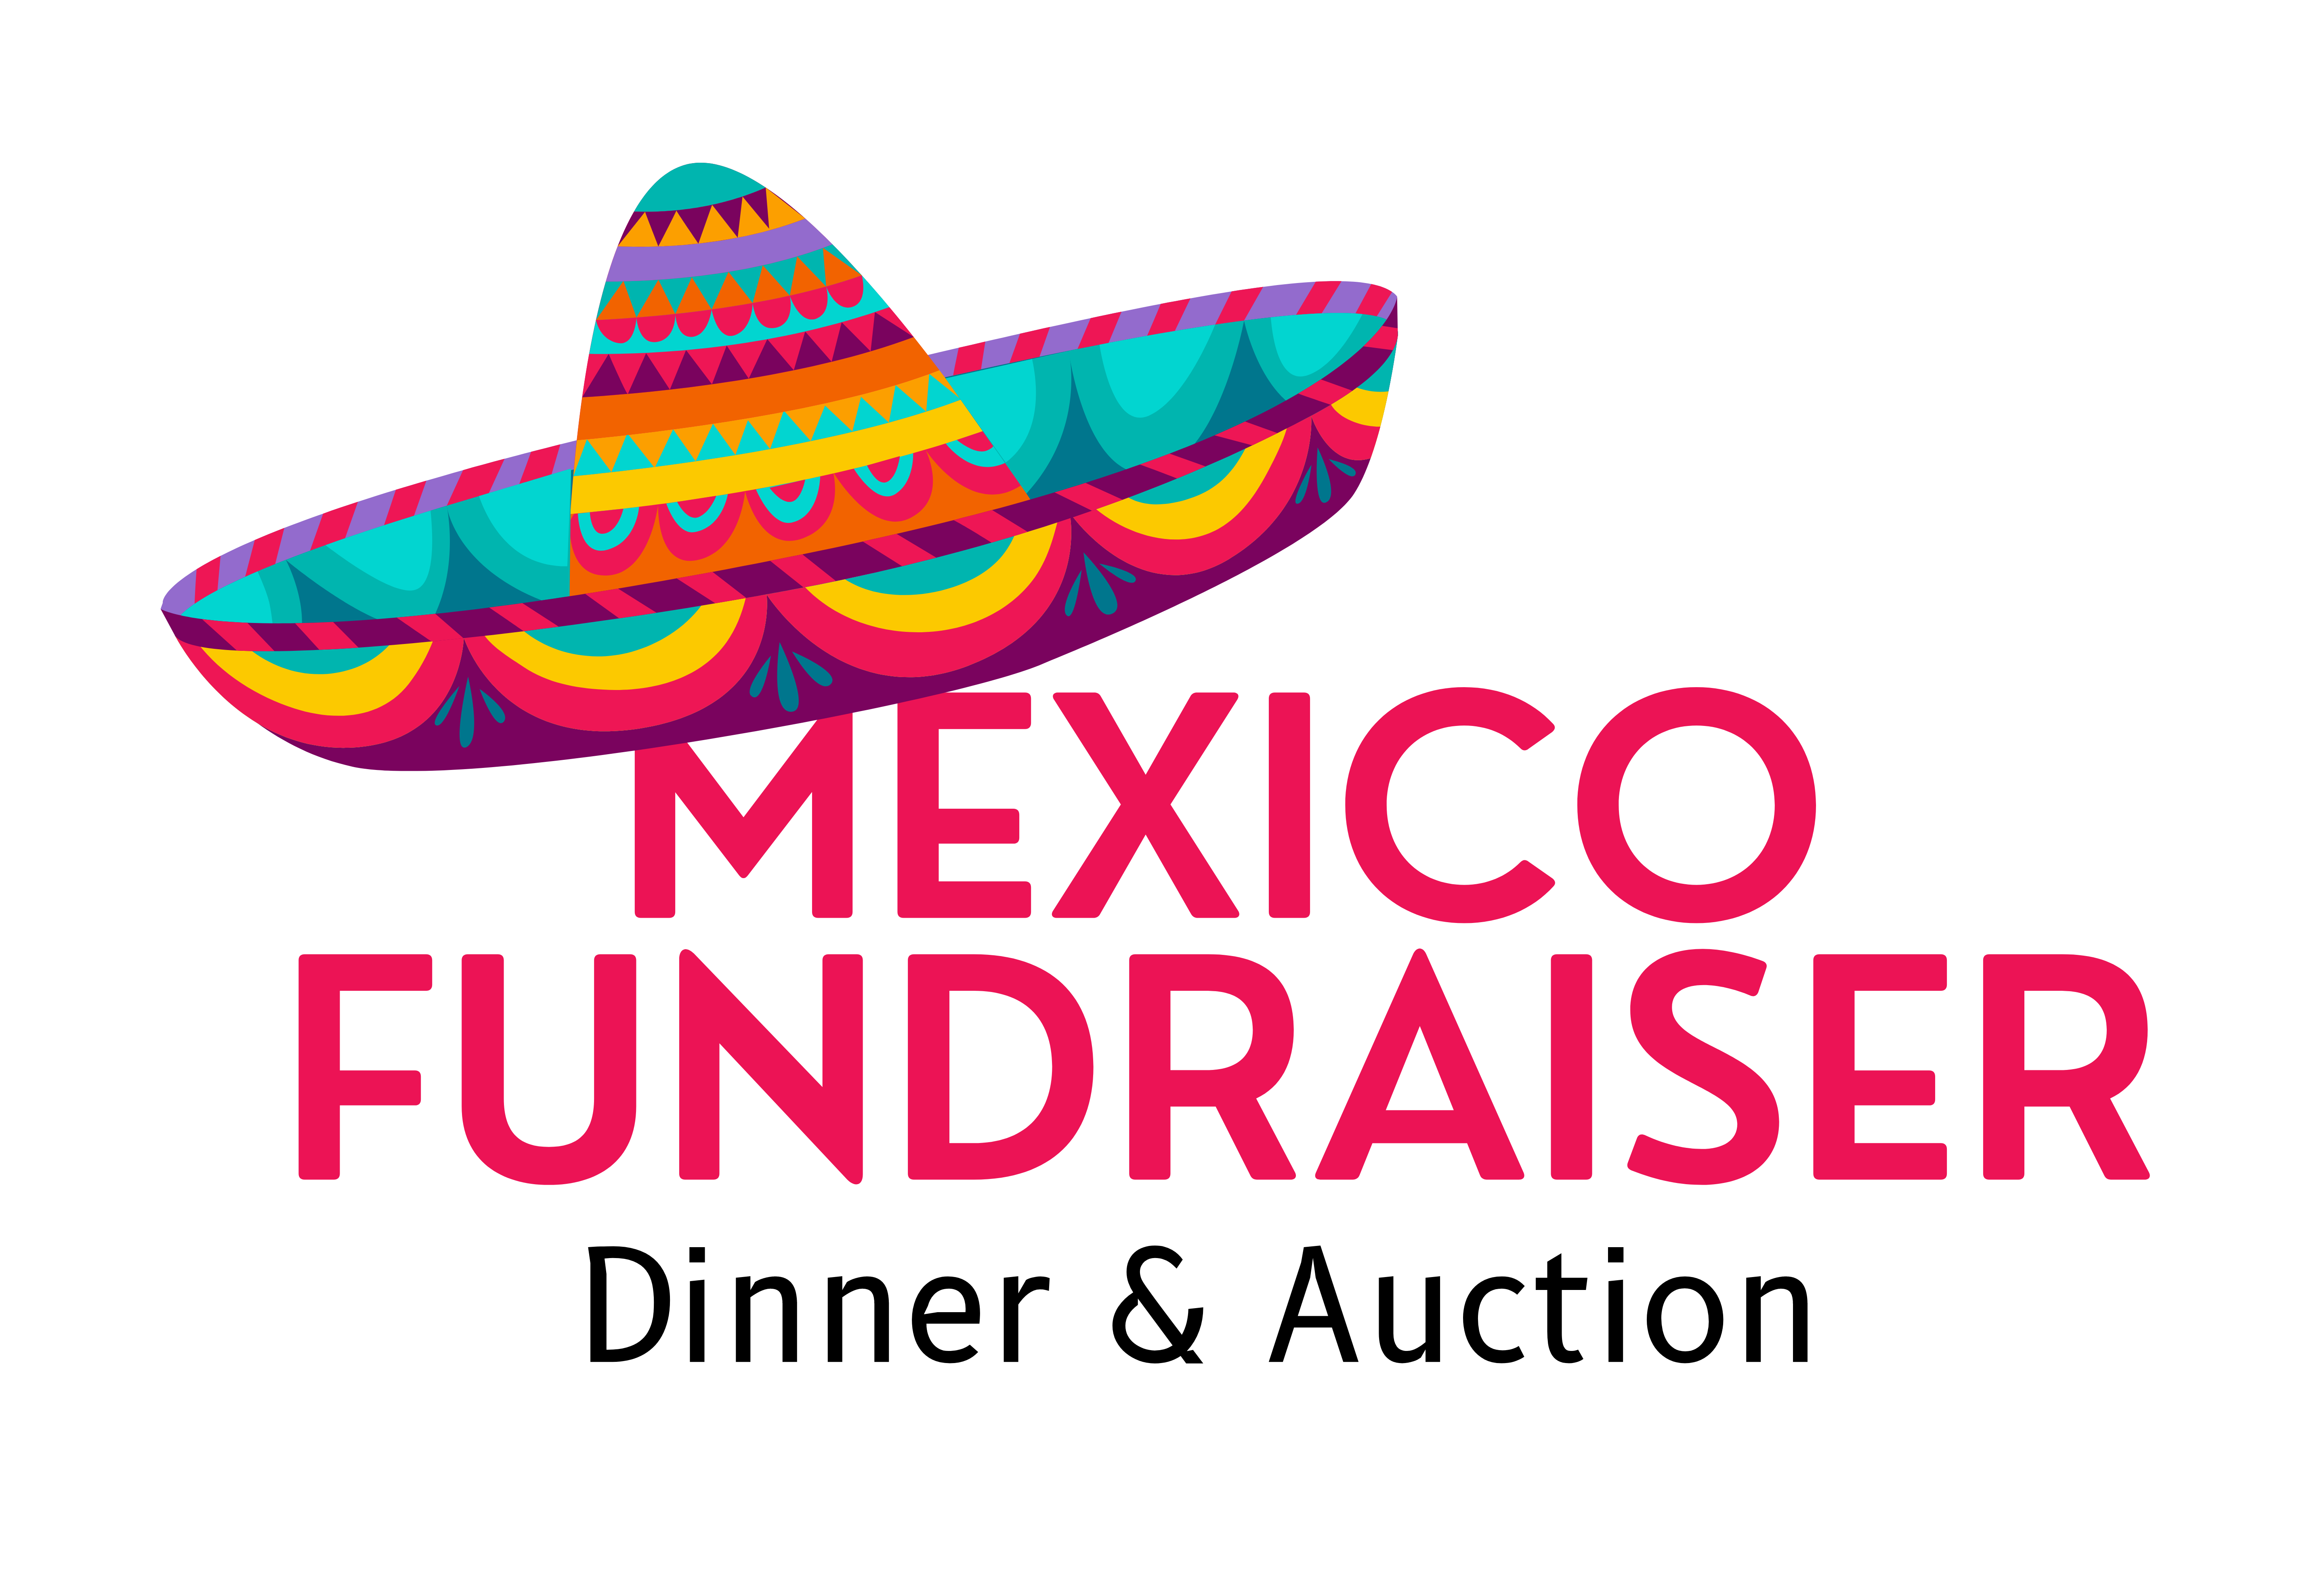 Mexico Fundraiser